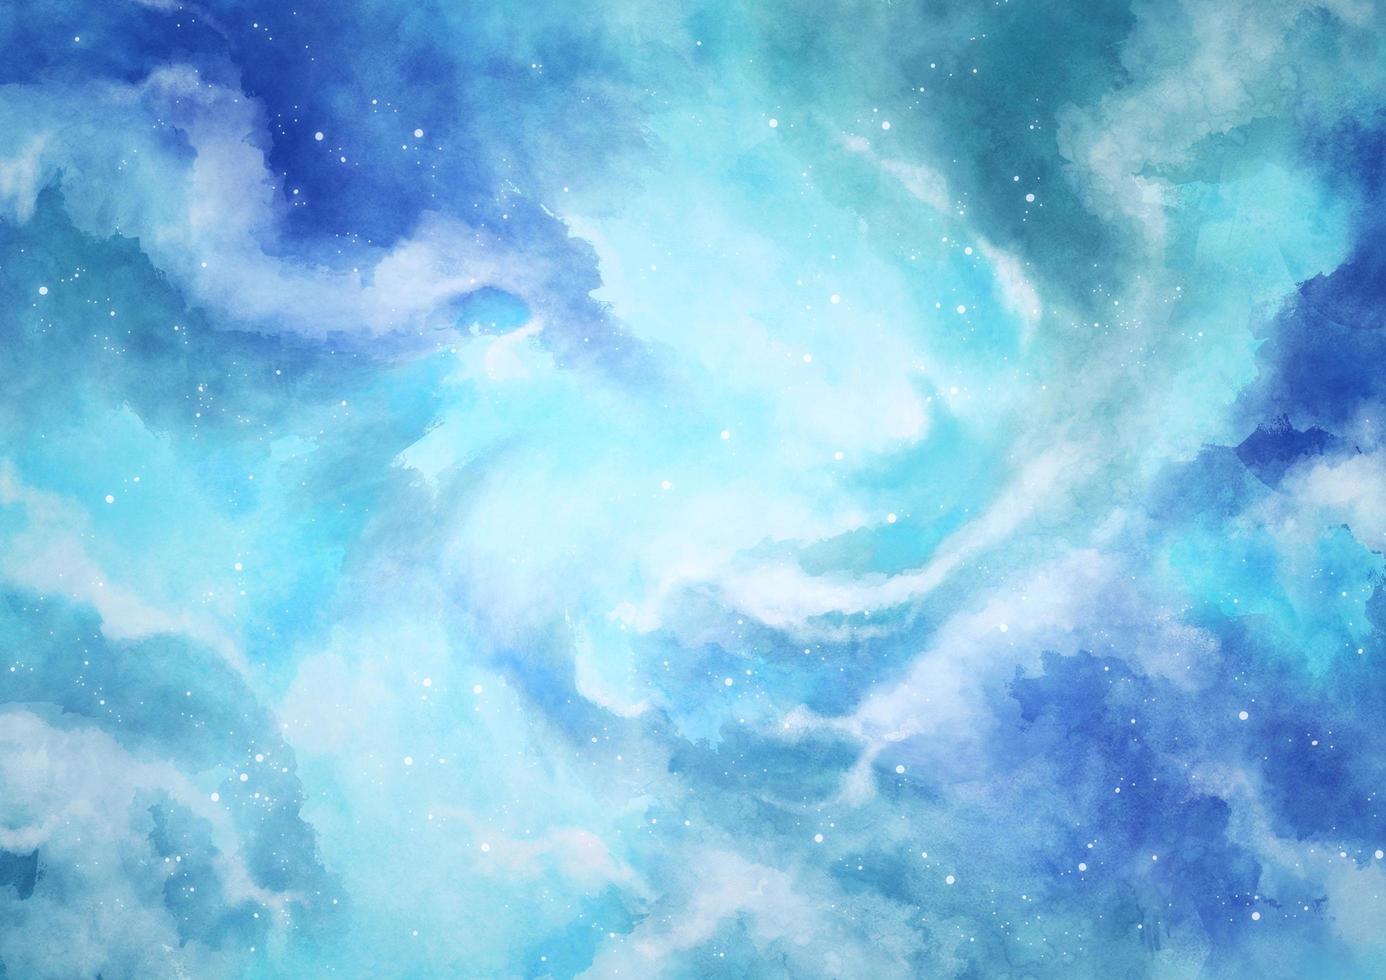 Blue stellar sky in watercolor photo